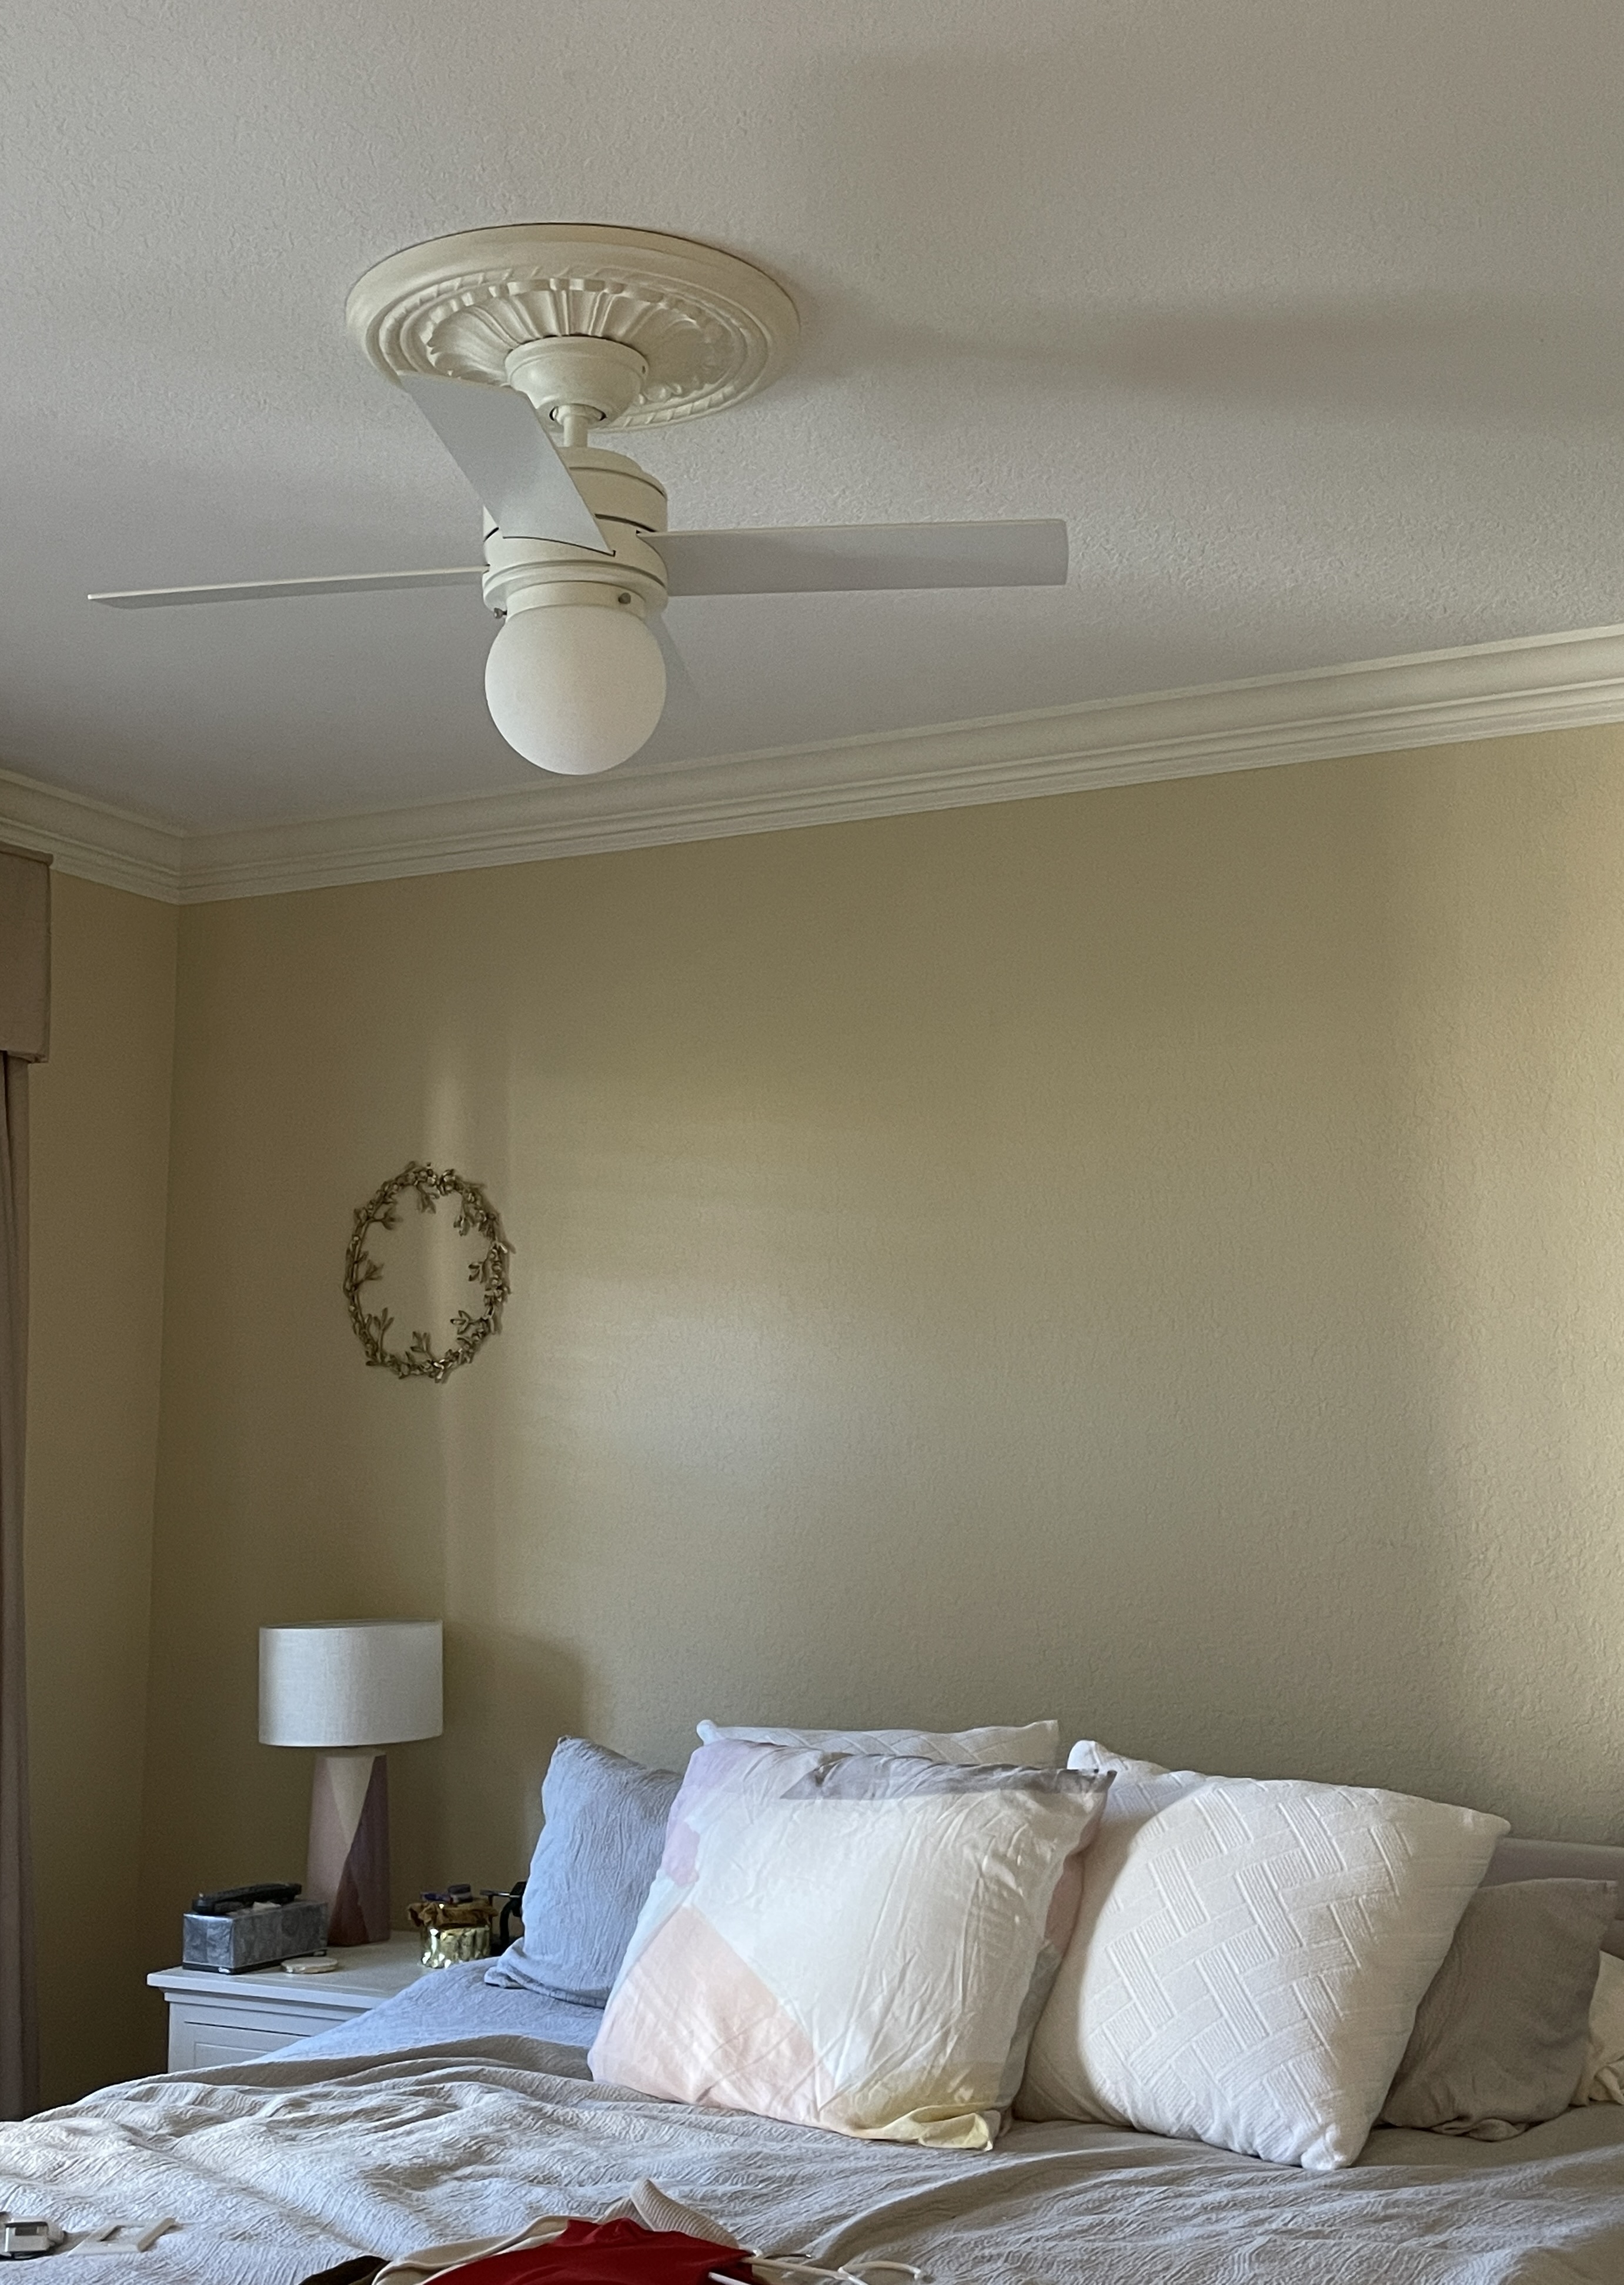 Primary Bedroom - Ceiling Fan